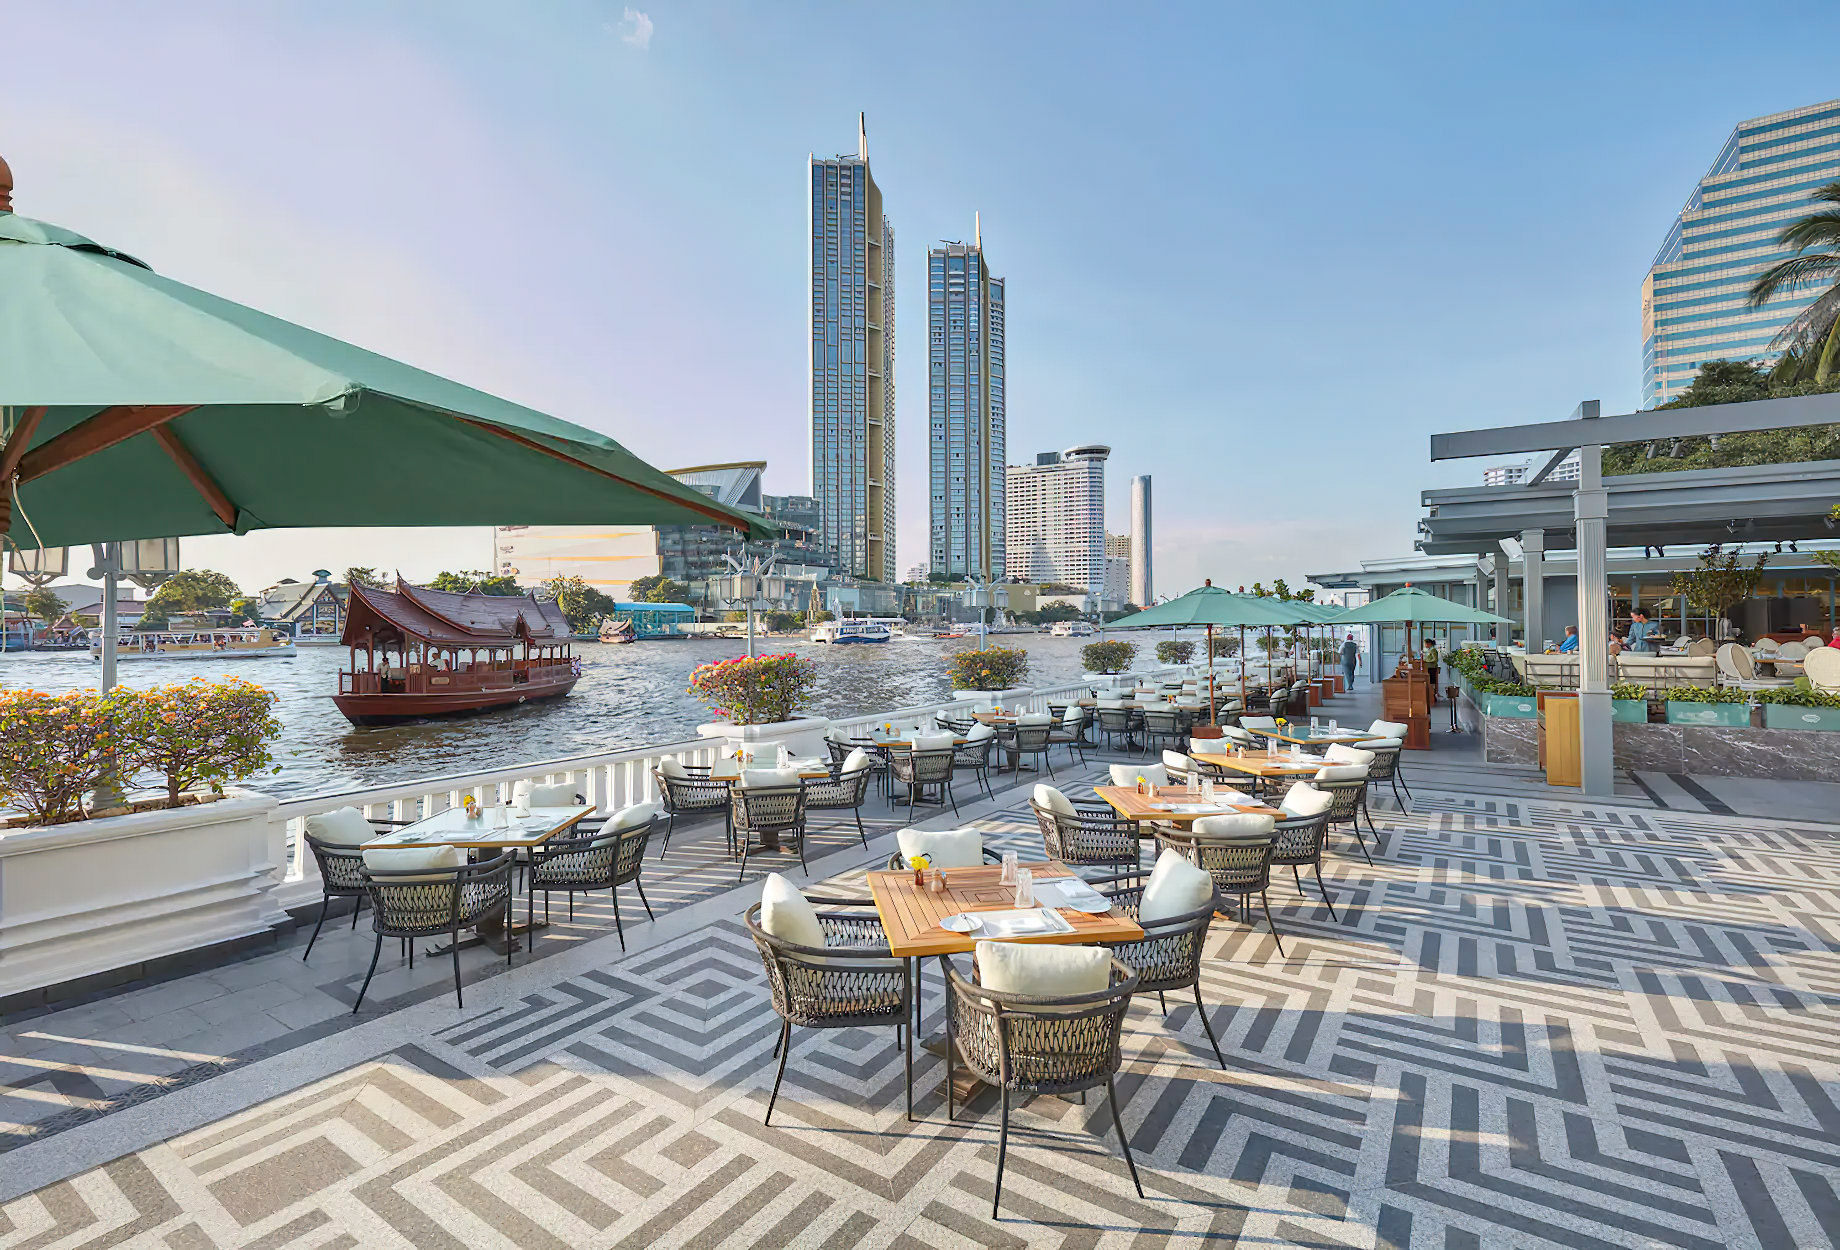 Mandarin Oriental, Bangkok Hotel – Bangkok, Thailand – The Verandah Restaurant Terrace